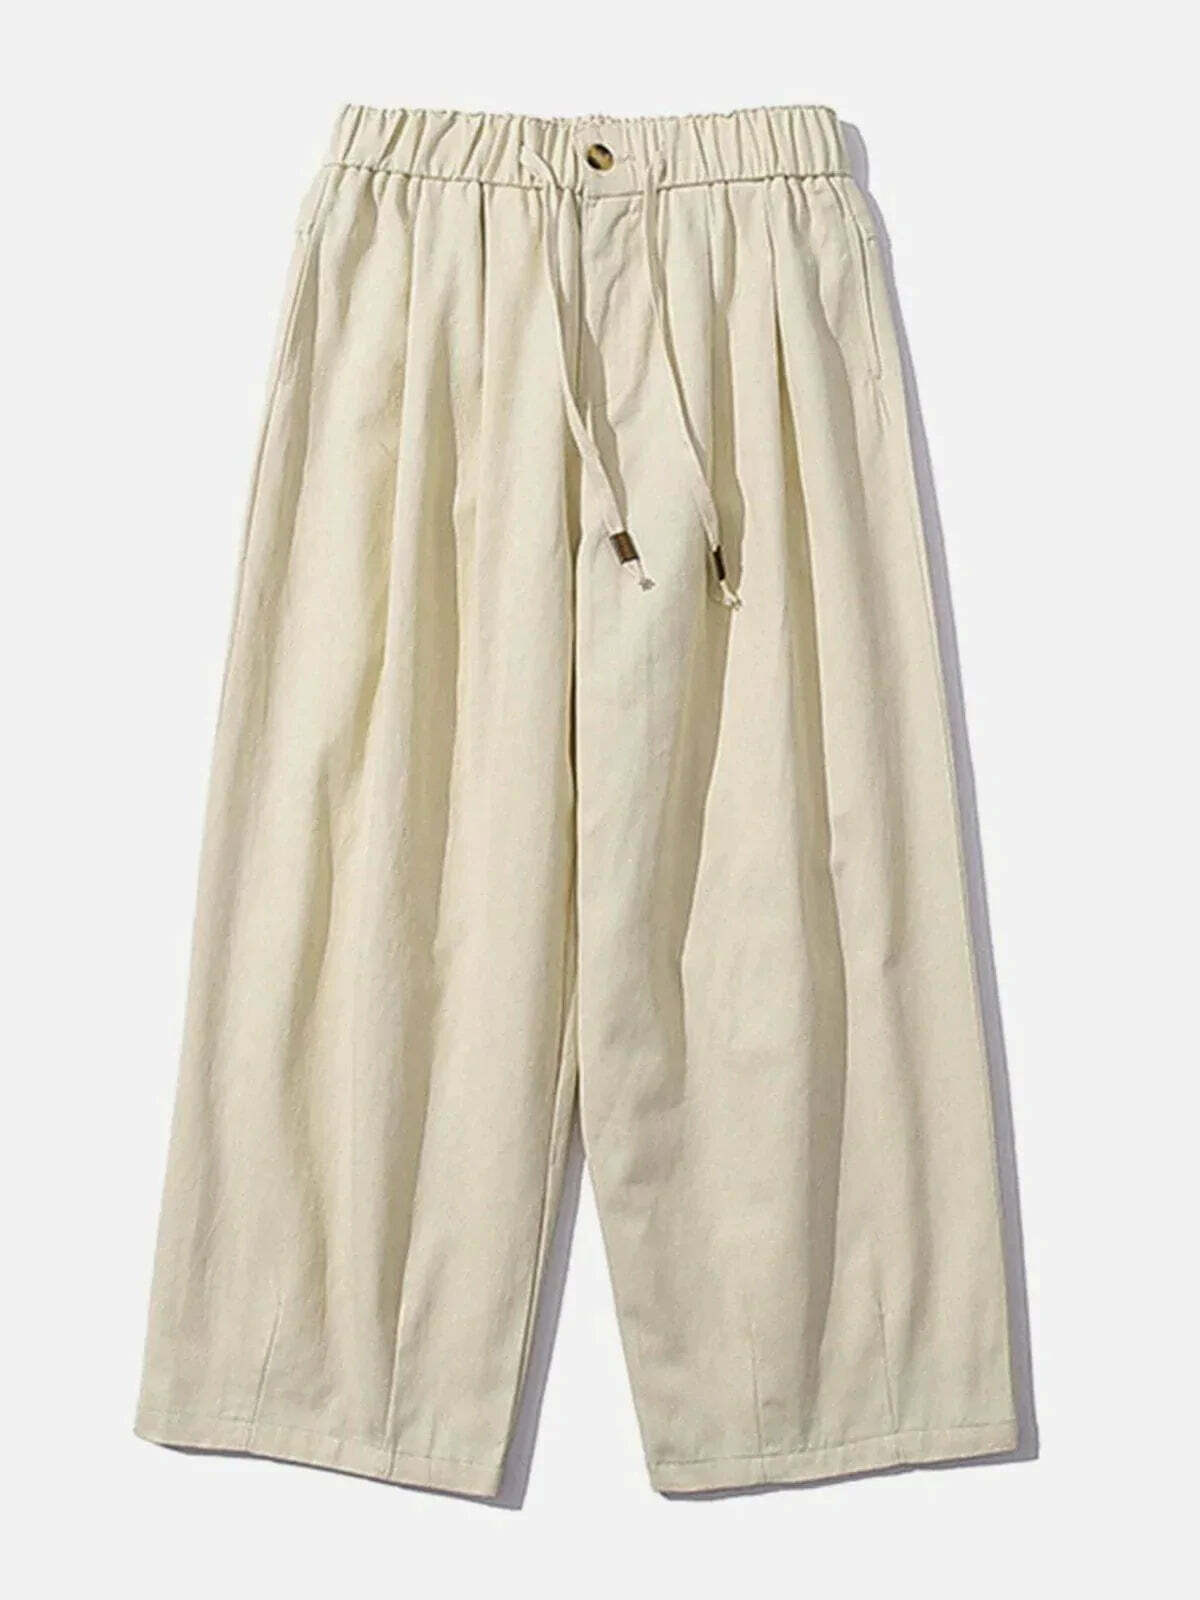 vintage drawstring cargo pants urban & edgy streetwear 5942